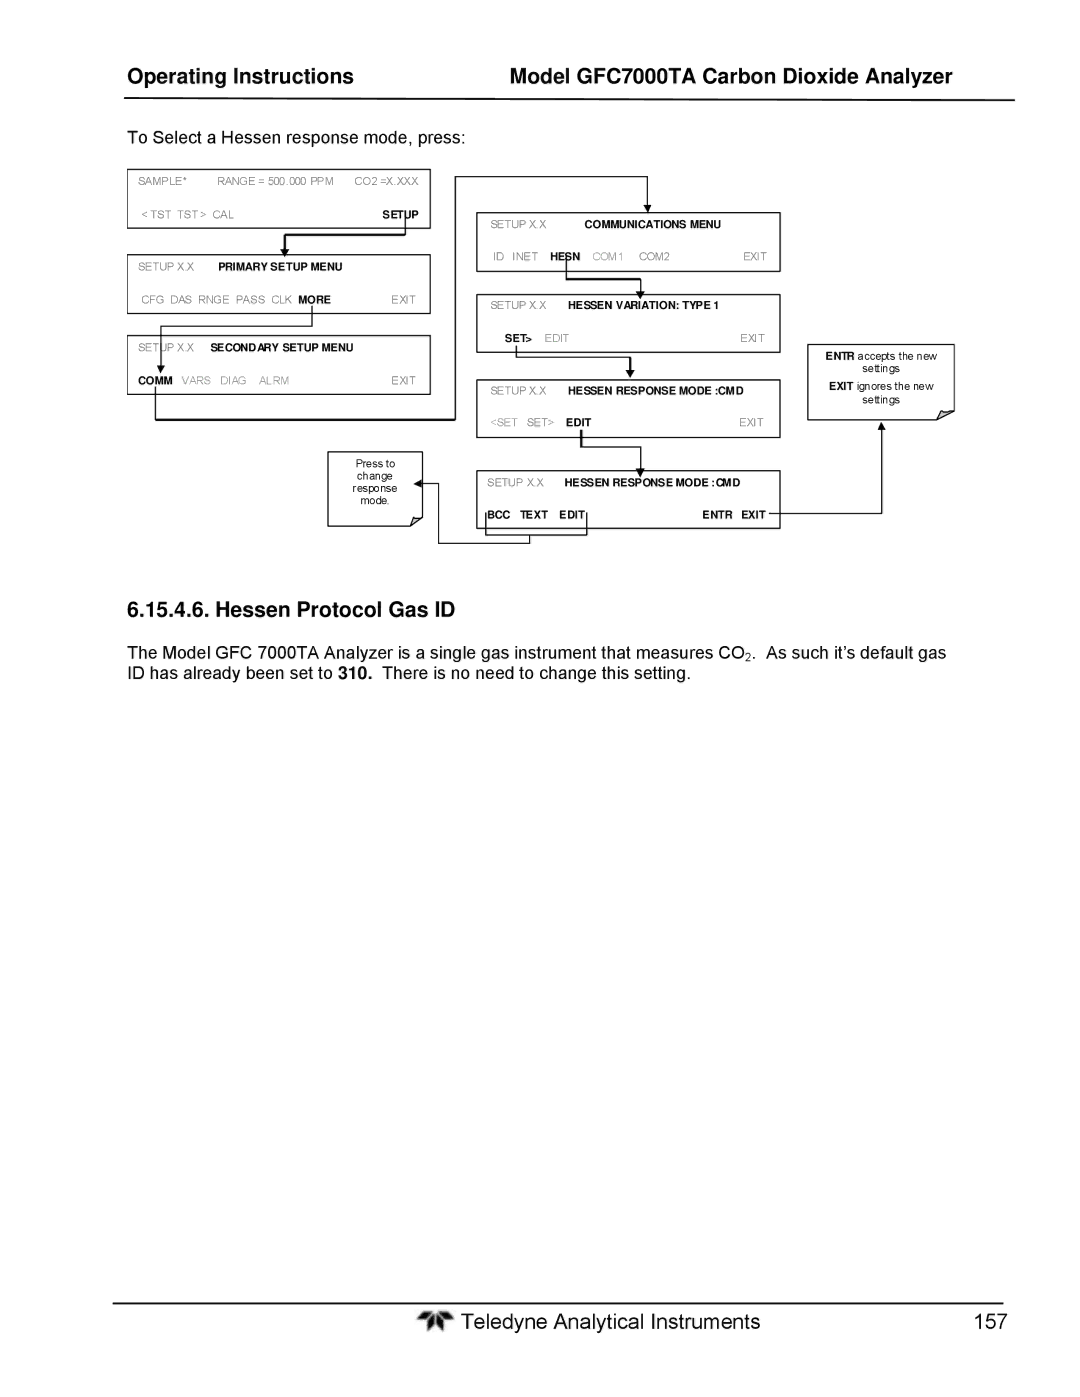 Teledyne gfc 7000ta operation manual Hessen Protocol Gas ID, To Select a Hessen response mode, press 